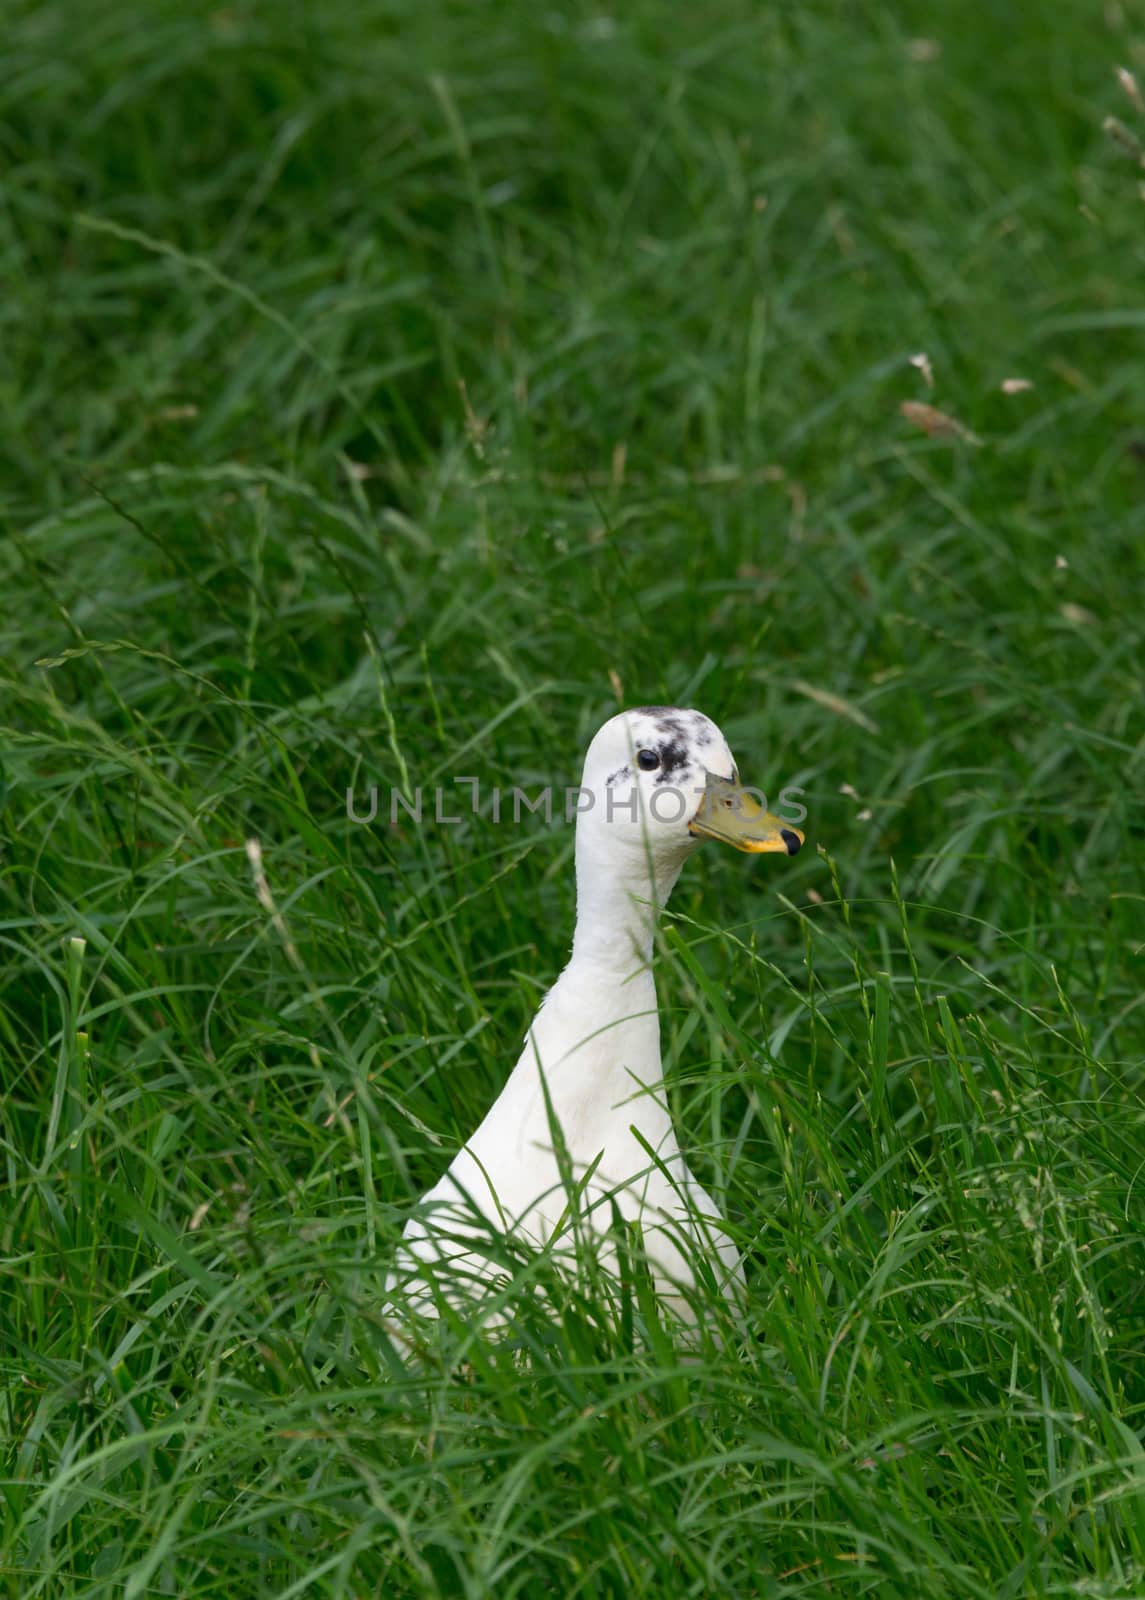 Duckling in Grass